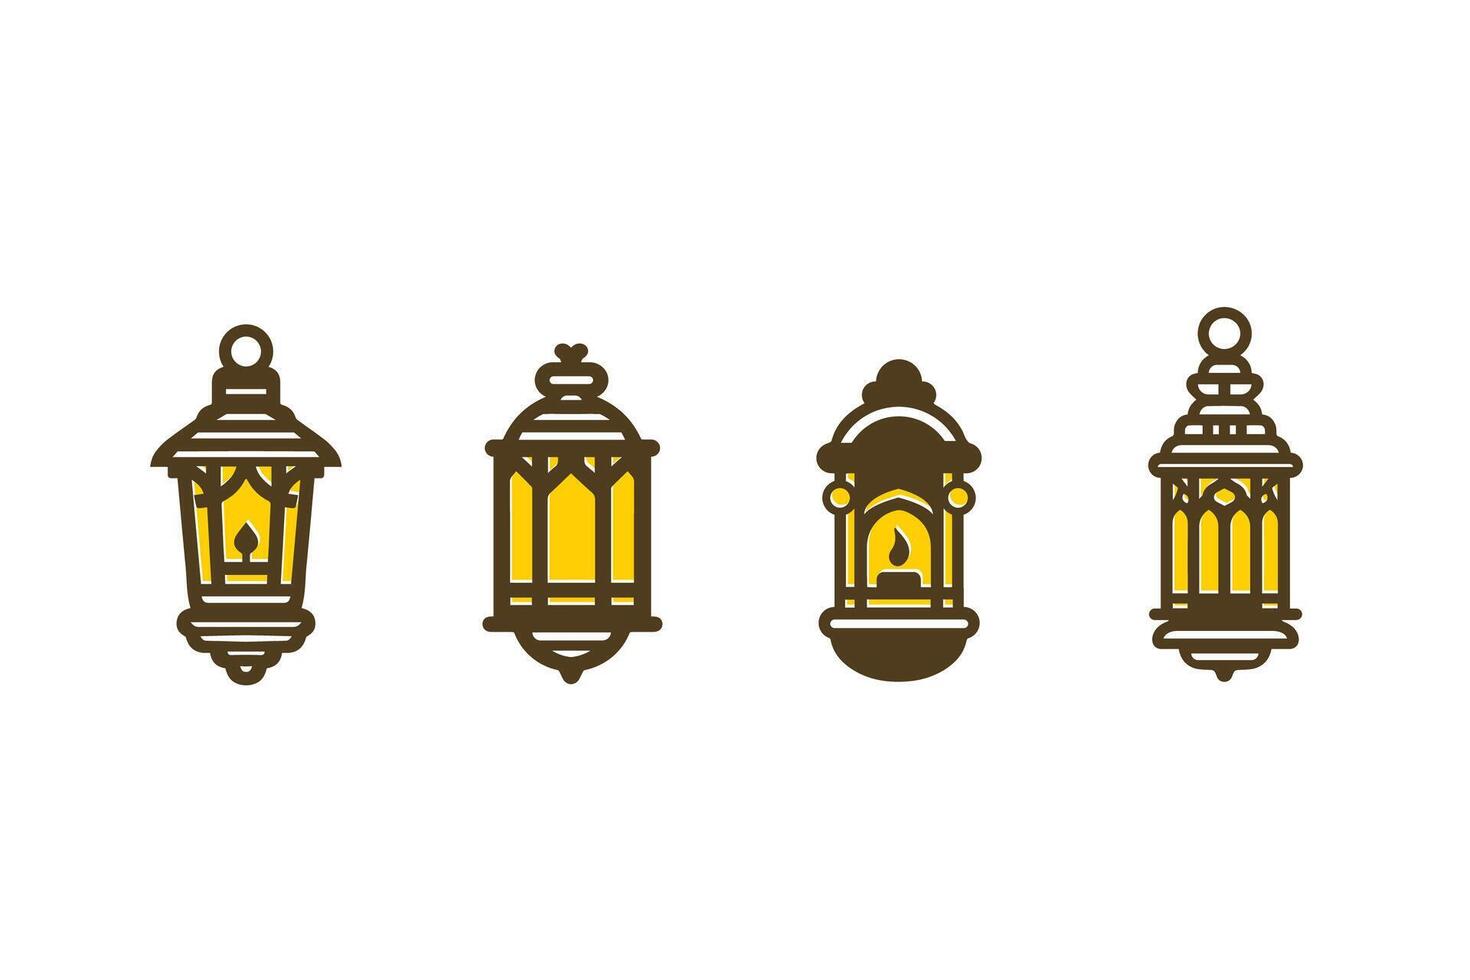 Ramadan lanterne logo. fanous linea lanterna, Arabo lampade sagome Vintage ▾. vettore illustrazione di lanterna per Ramadan